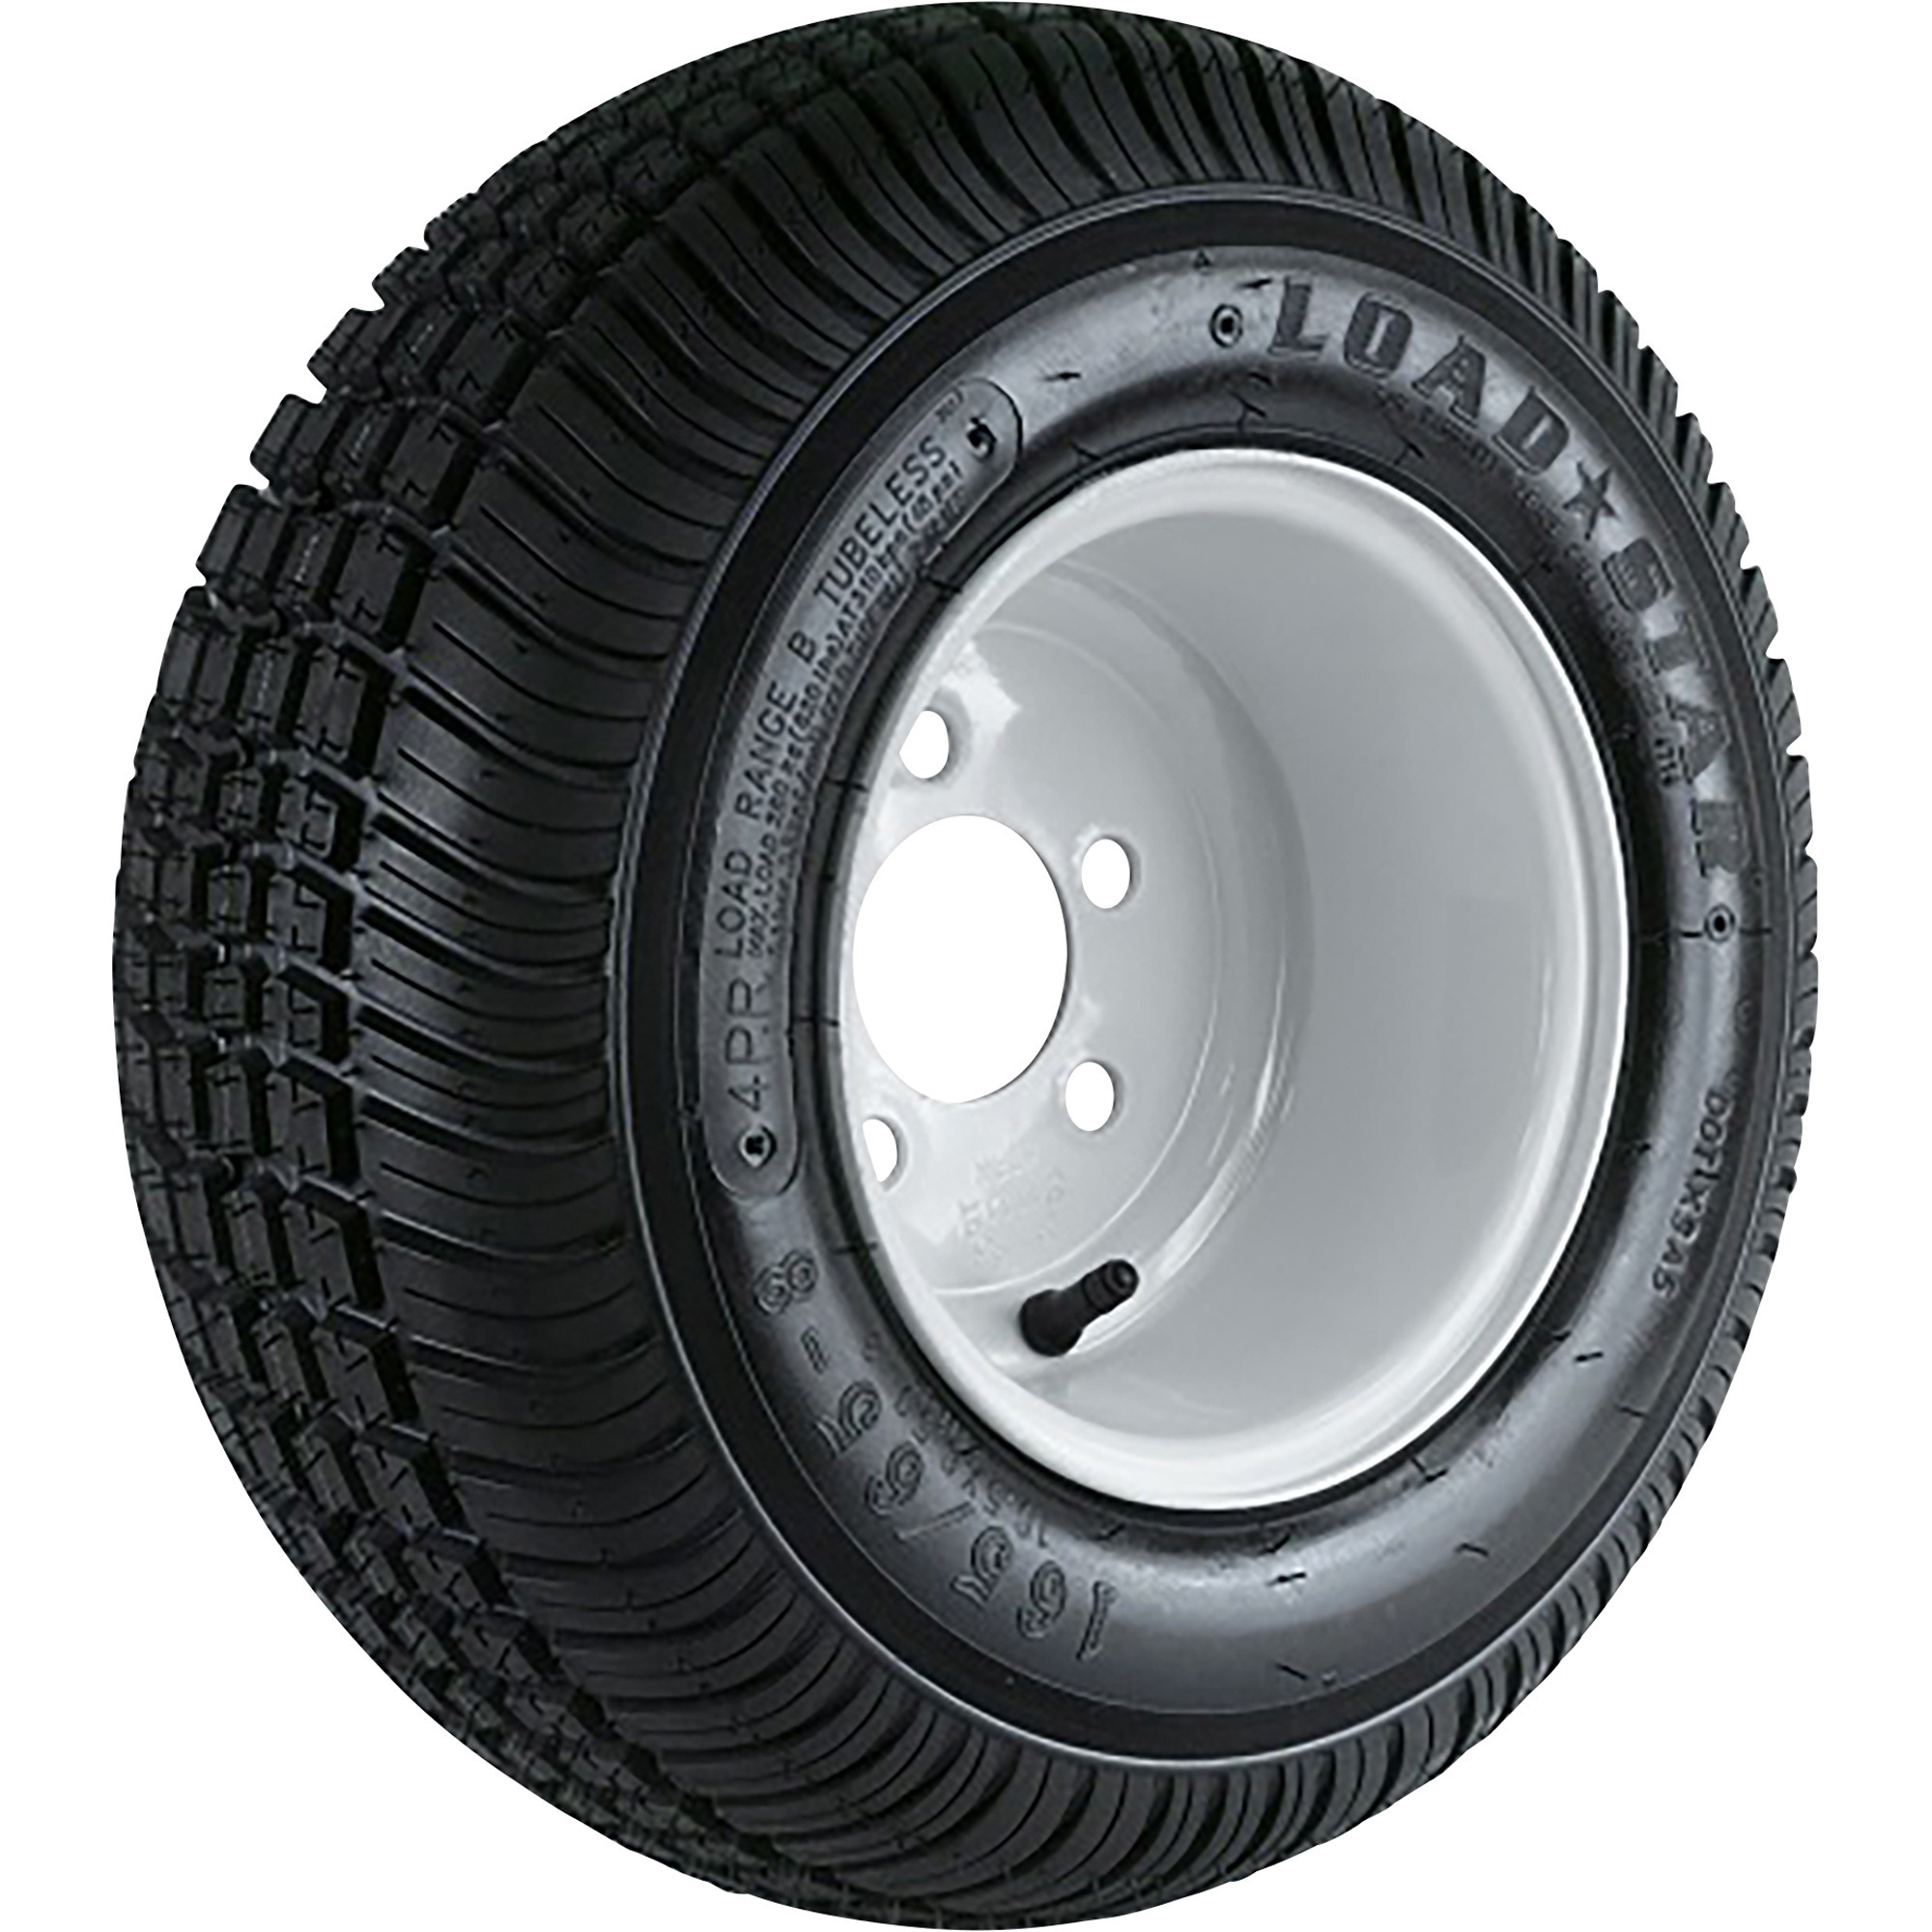 Kenda Loadstar 8Inch Bias-Ply Trailer Tire and Wheel Assembly â 165/65-8, 5-Hole, Load Range B, Model DM1658B-5I